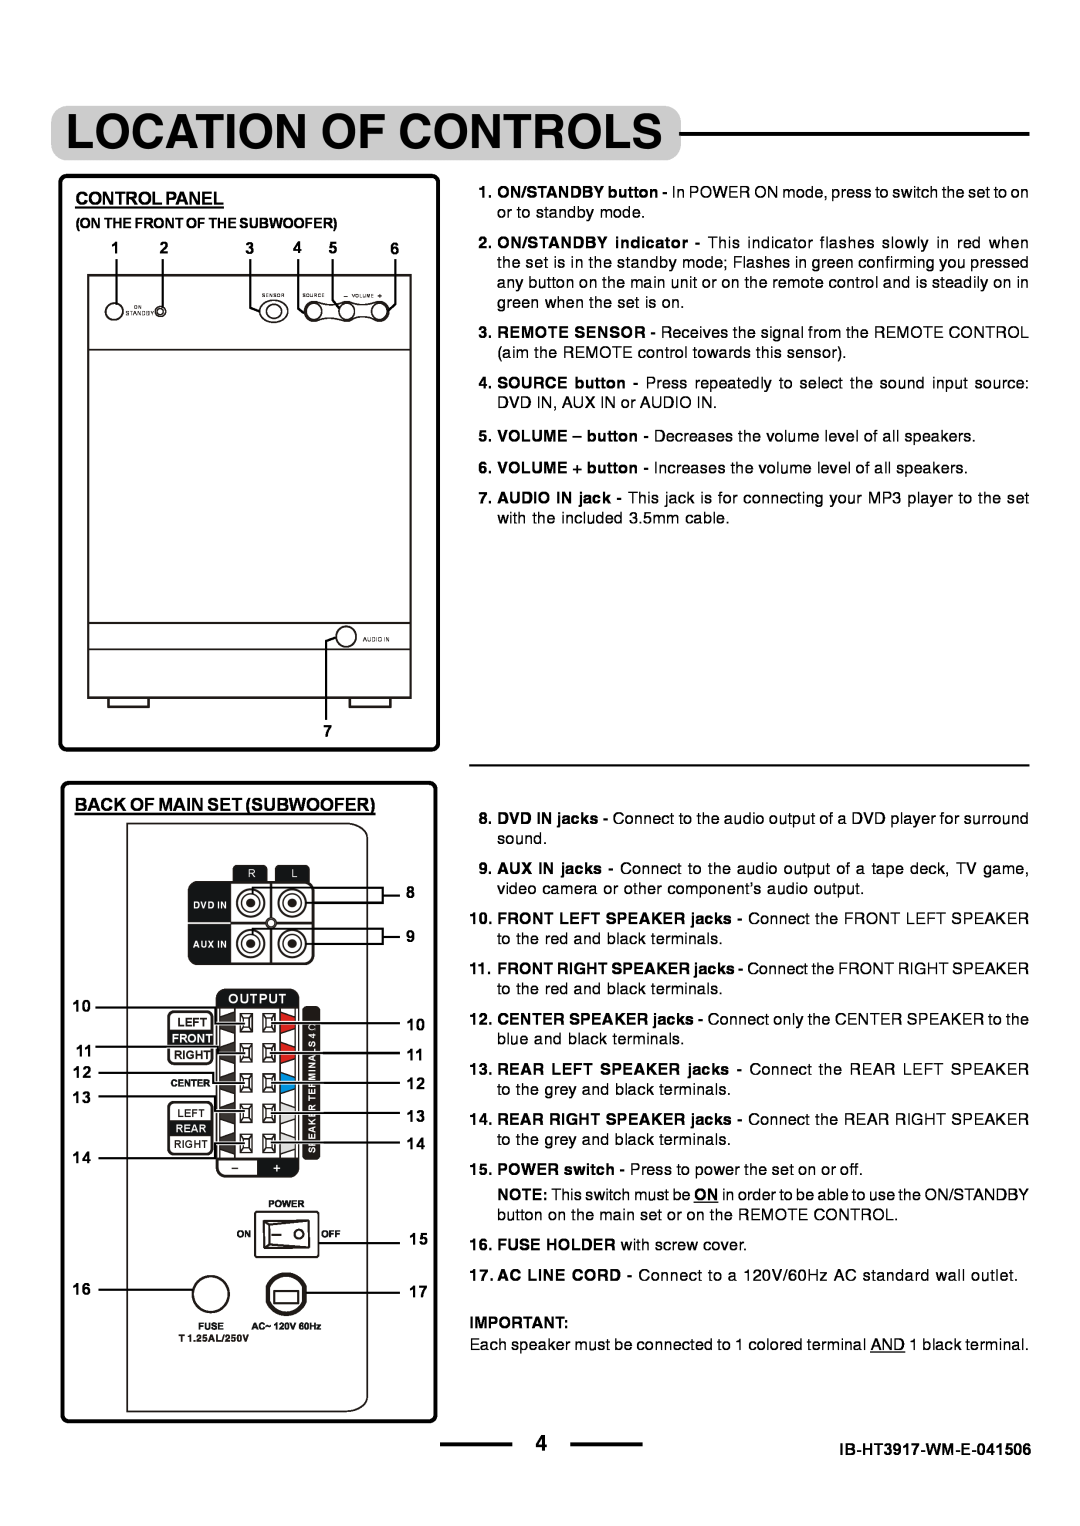 Lenoxx Electronics HT3917 manual Control Panel, Back Of Main Set Subwoofer 